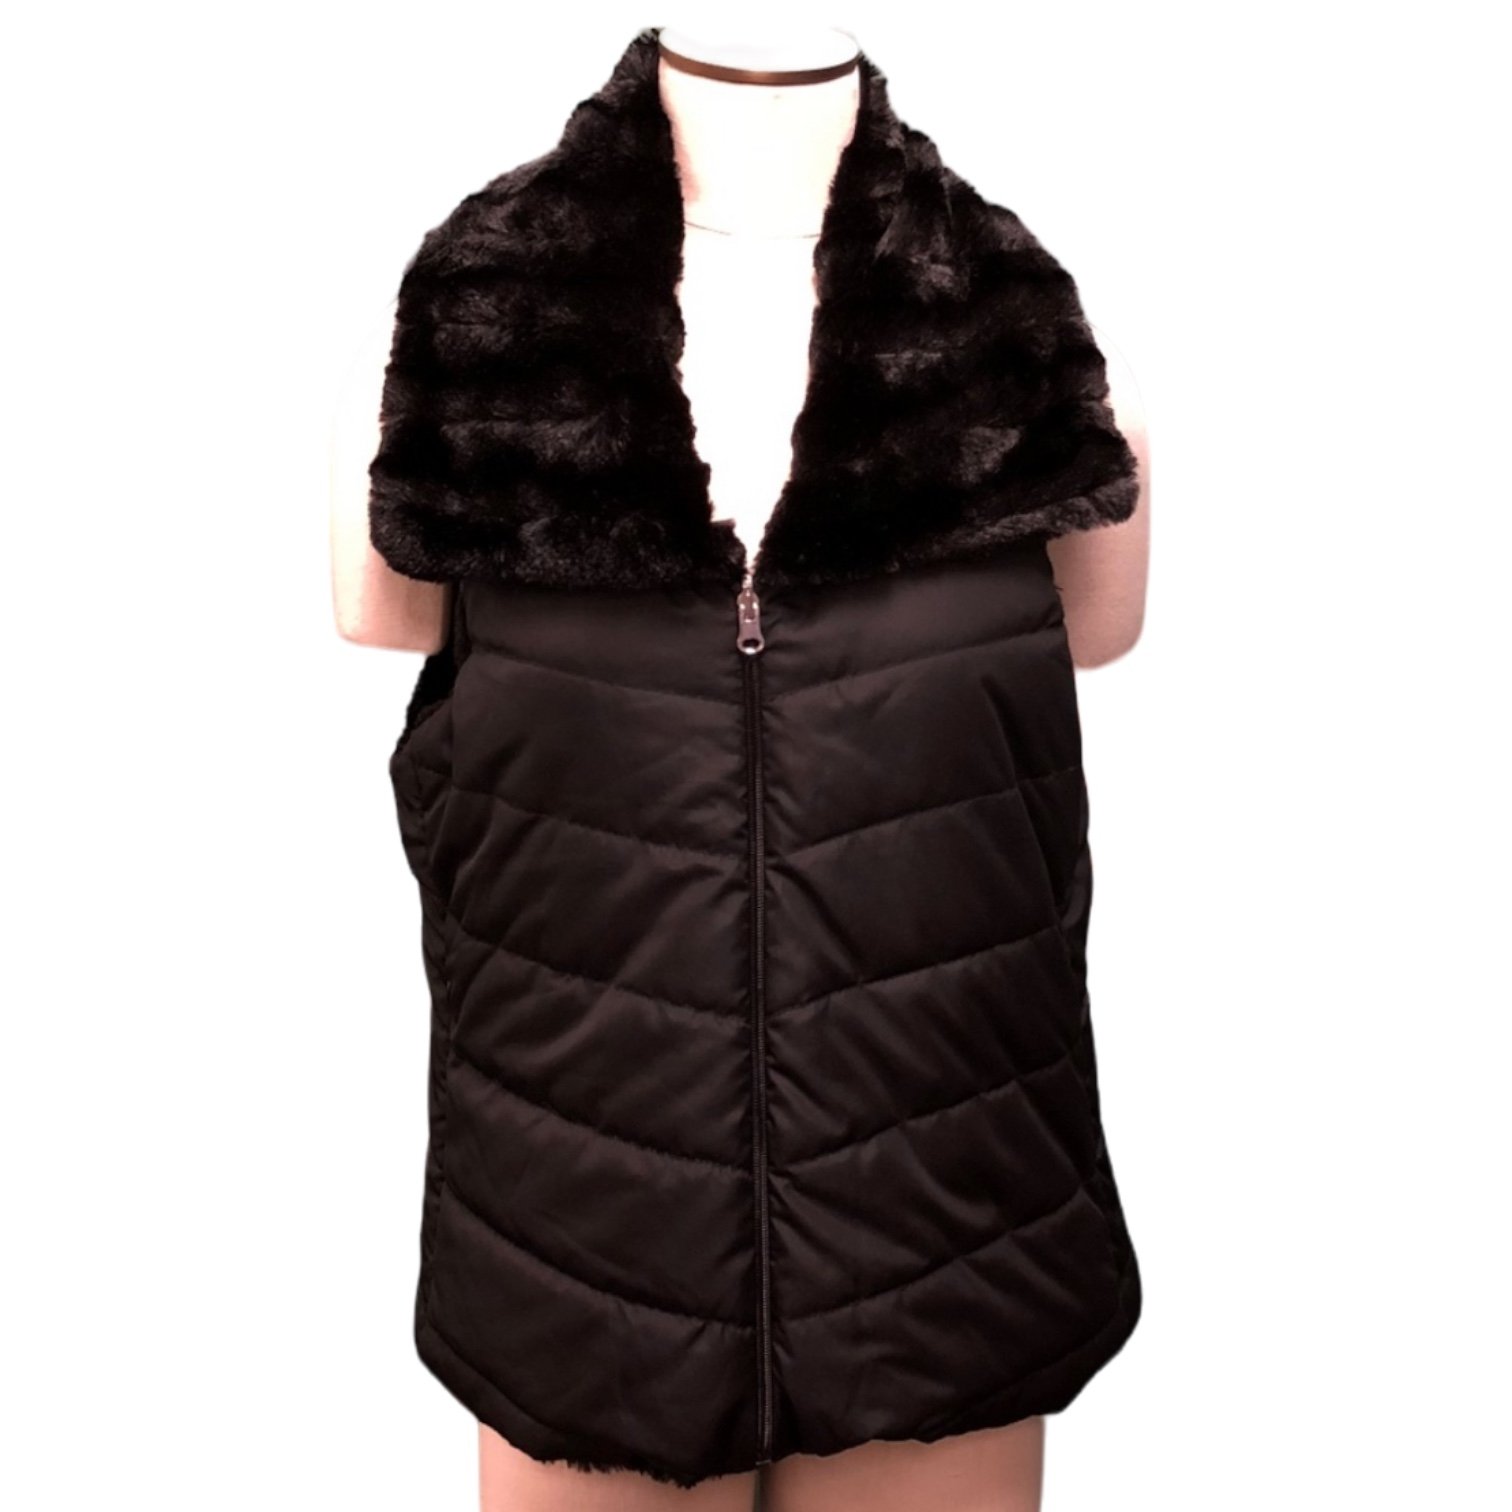 Personality Ellen Reyes Black Plush Reversible Vest iC3TxgVl7 Low Price